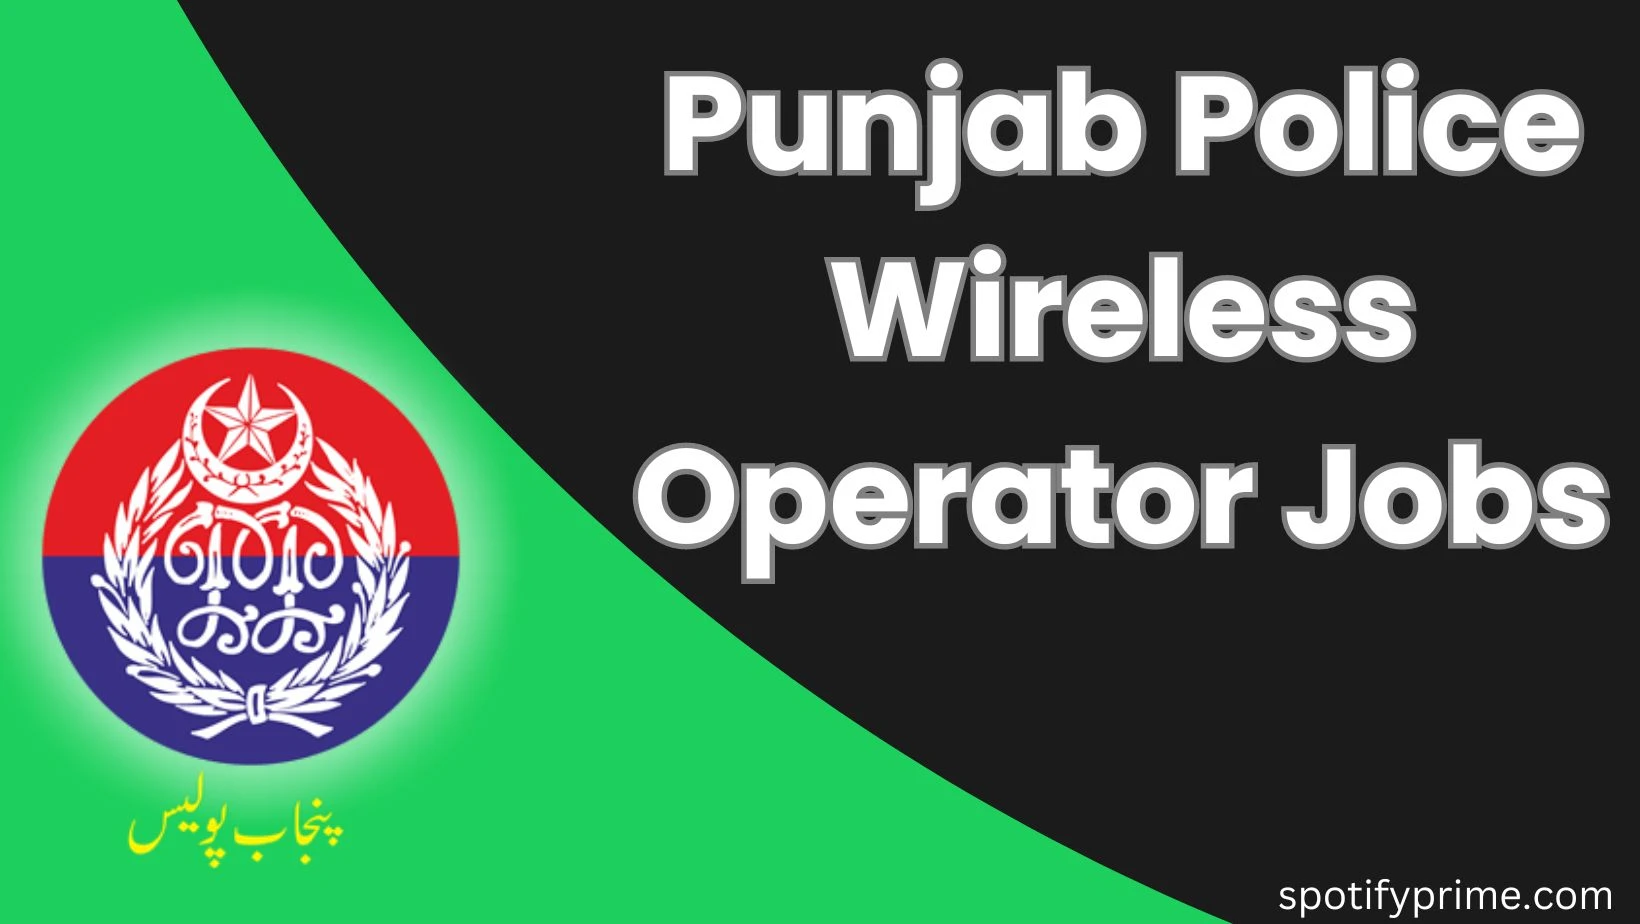 Punjab Police Wireless Operator Jobs